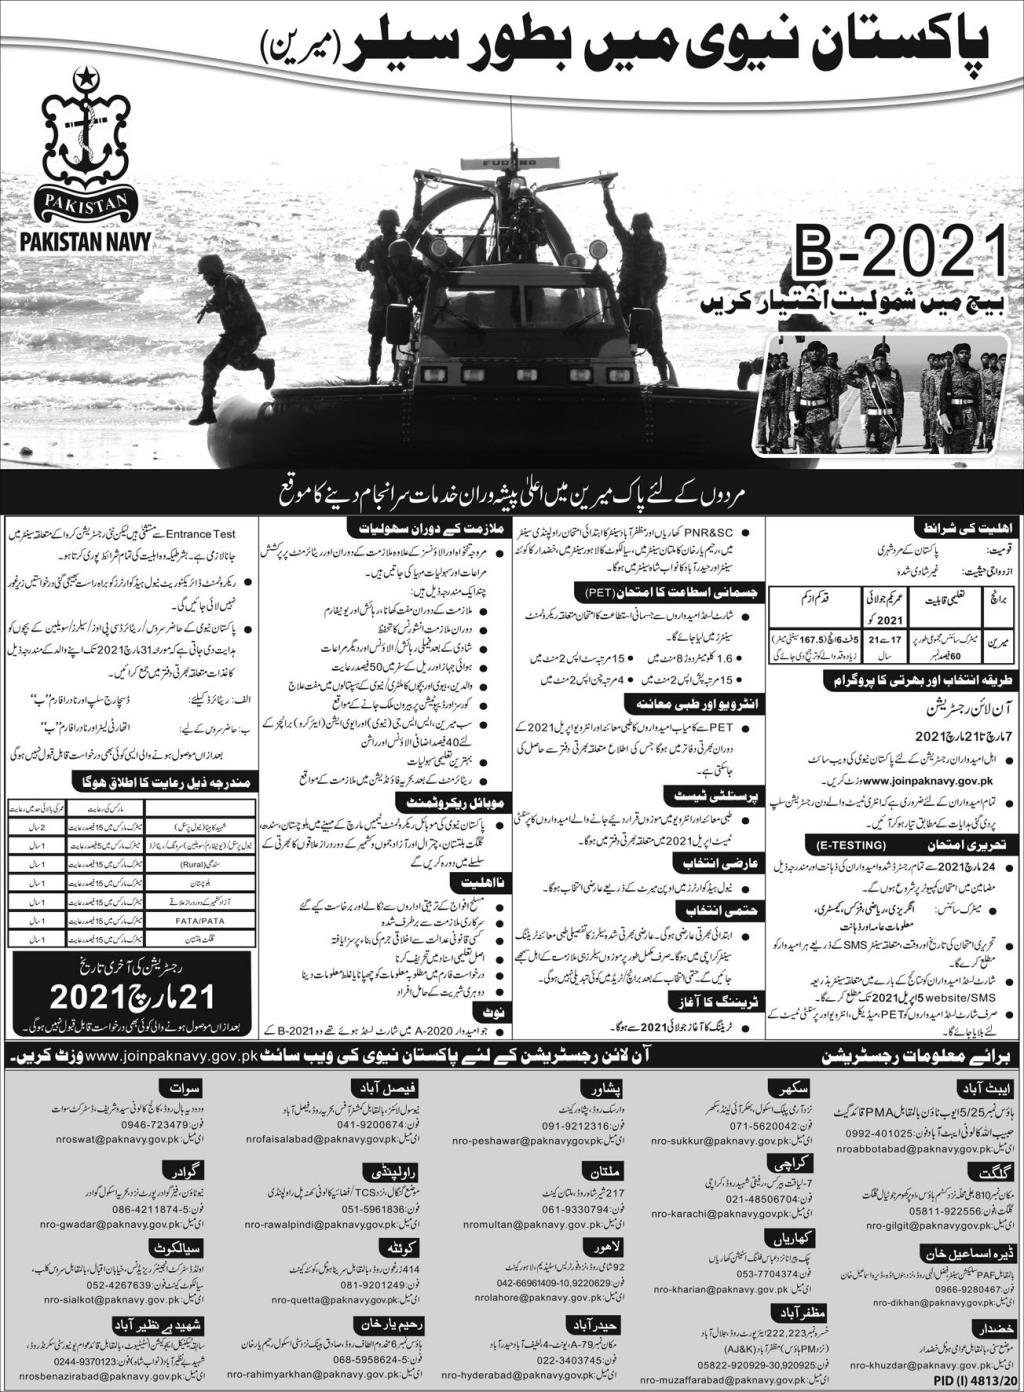 Pak Navy March 2021 Jobs - www.joinpaknavy.gov.pk Jobs 2021 - Pak Navy New Jobs - Pak Navy 2021 Jobs - Navy Jobs in Pakistan 2021